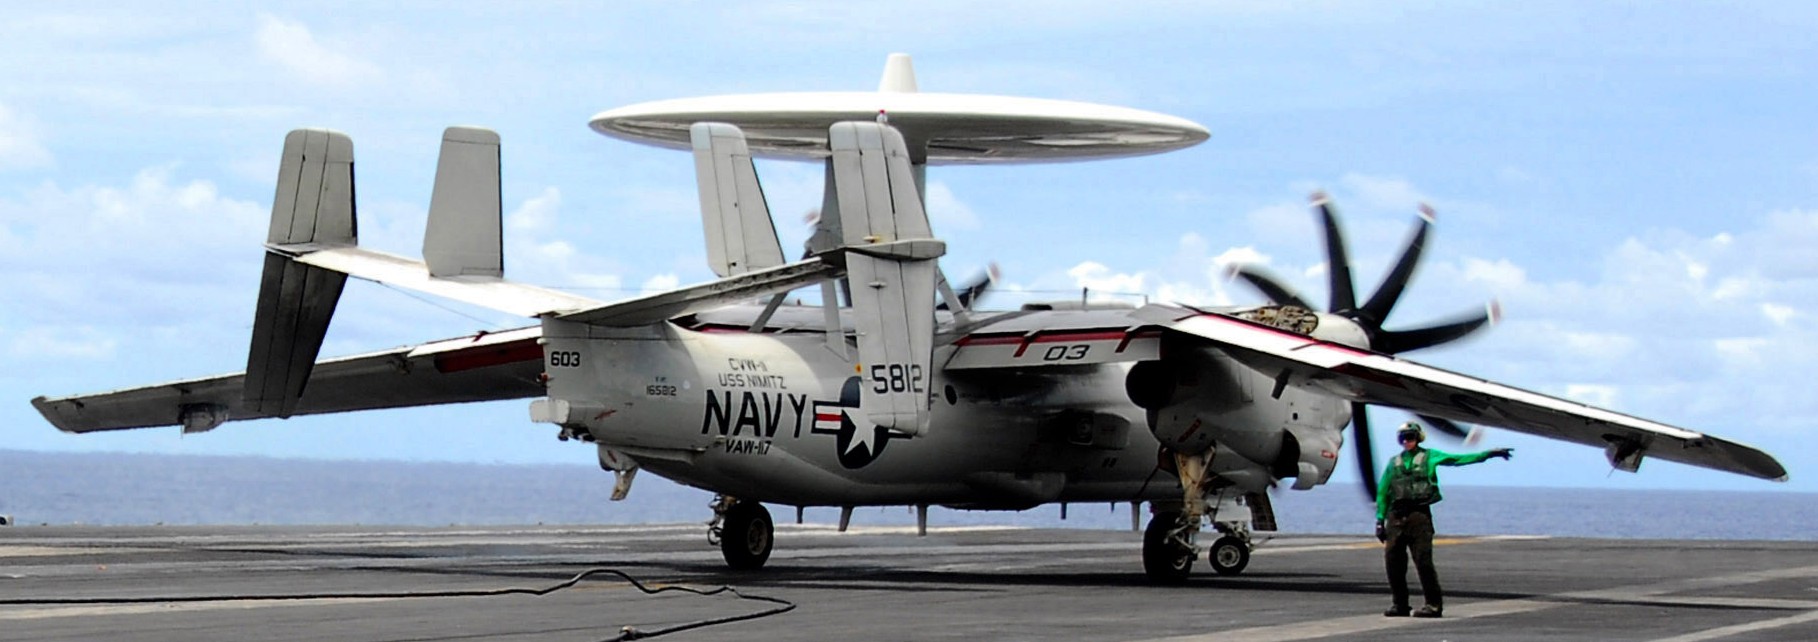 vaw-117 wallbangers carrier airborne early warning squadron navy e-2c hawkeye cvw-11 uss nimitz cvn-68 107